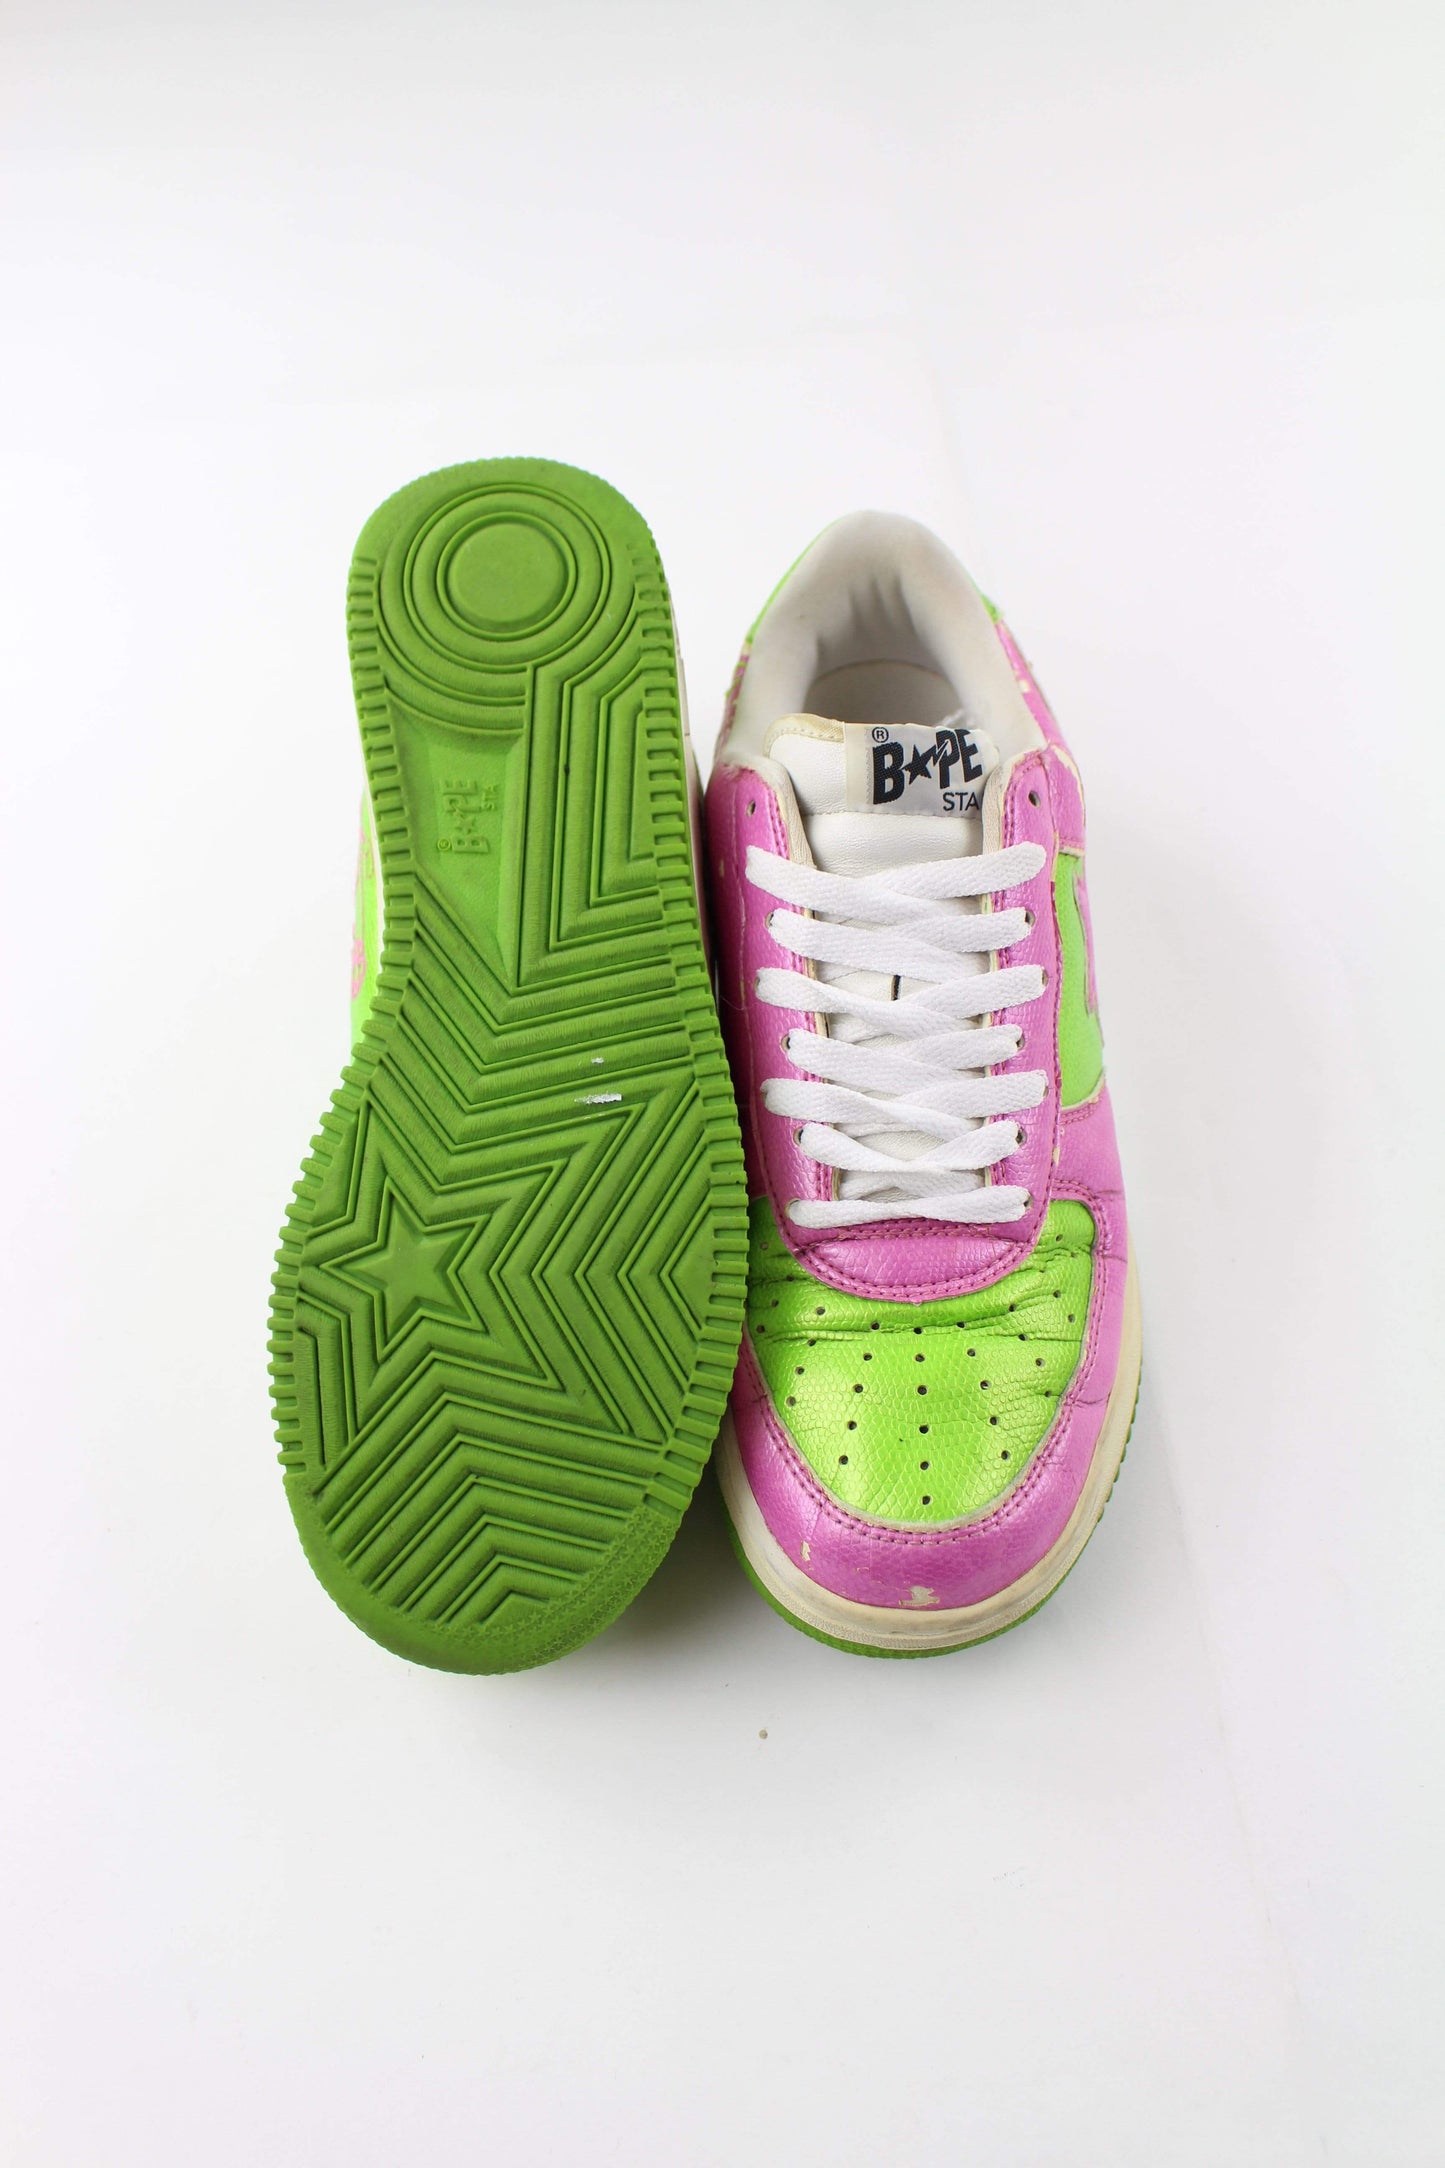 Bapesta x Futura Green & Pink - SaruGeneral